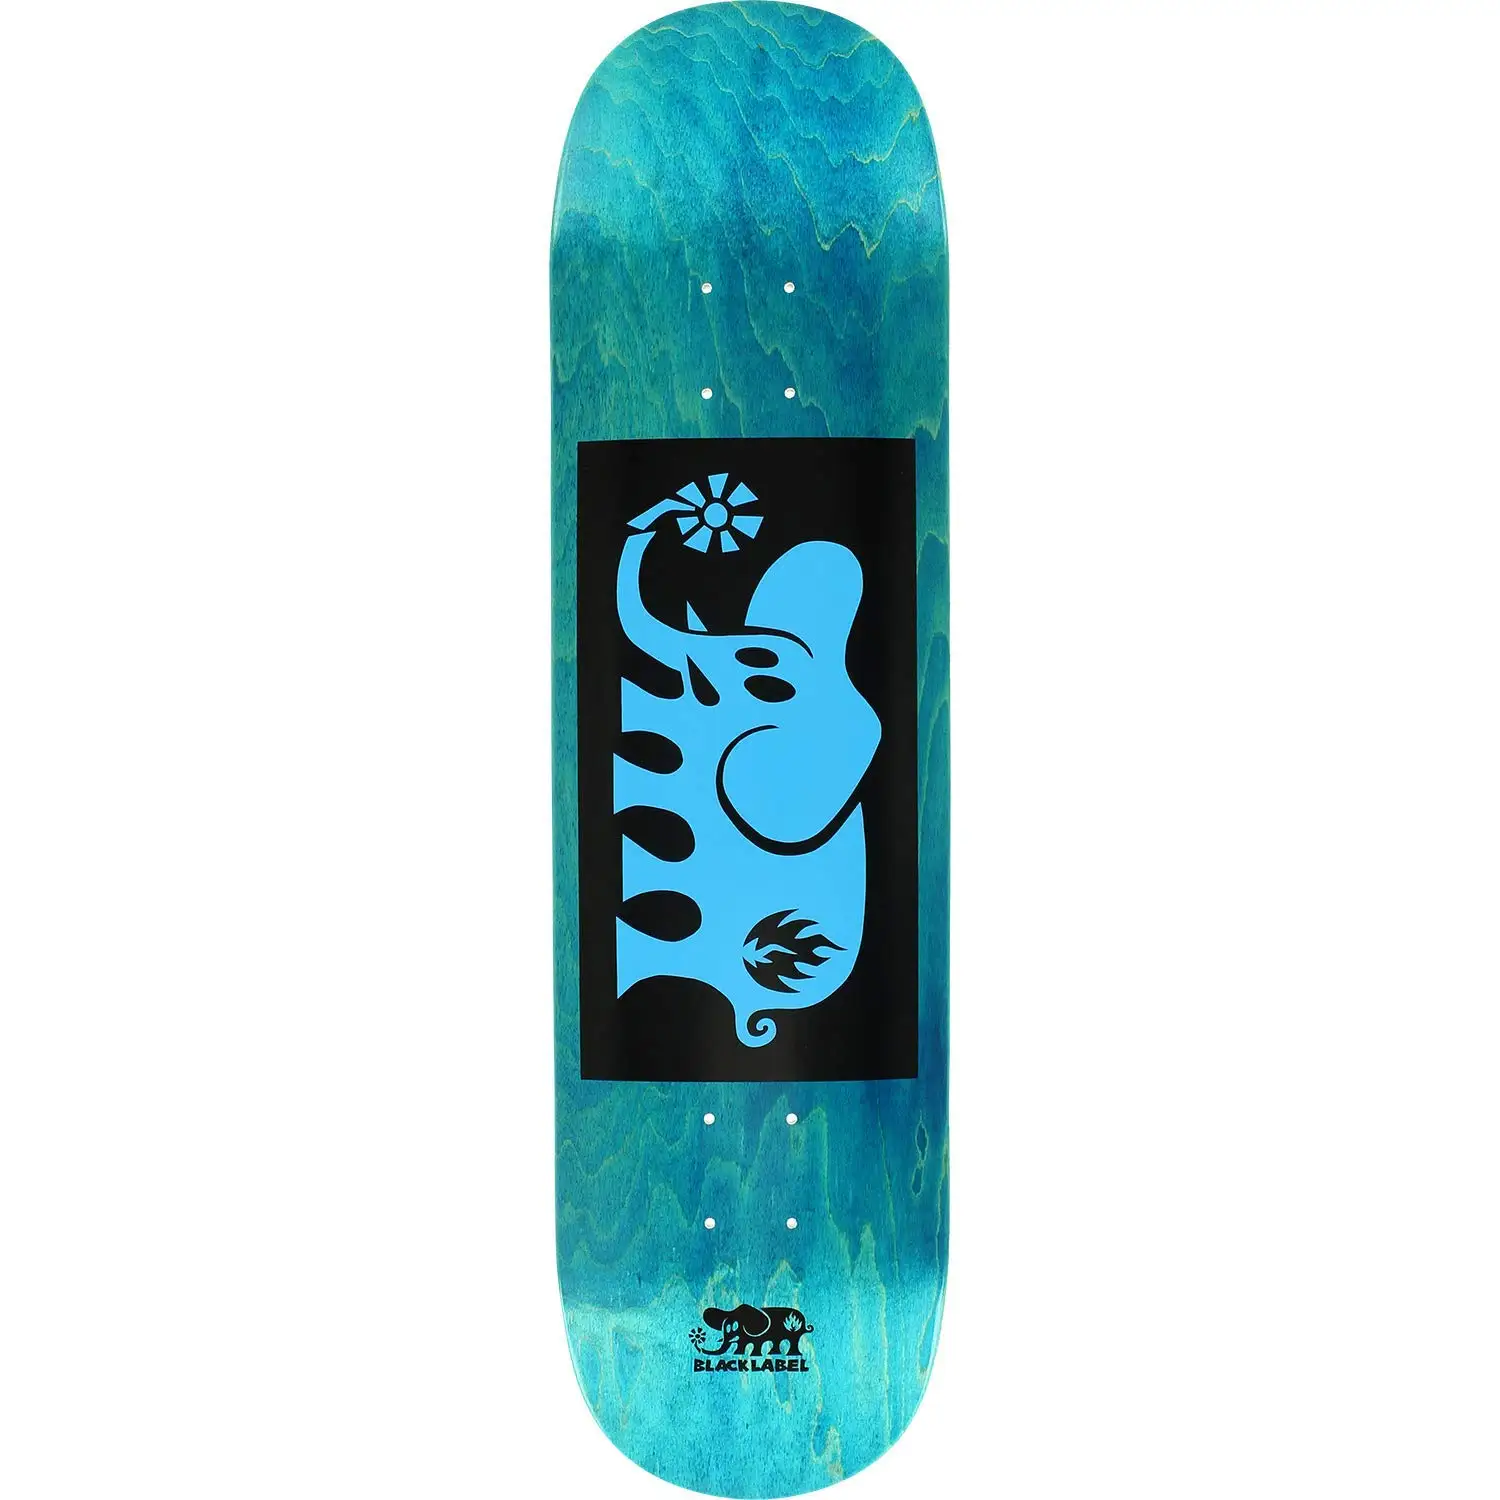 Powell VALLELY Elephant Skate DECK-10x30.25 Blue w//Mob Grip